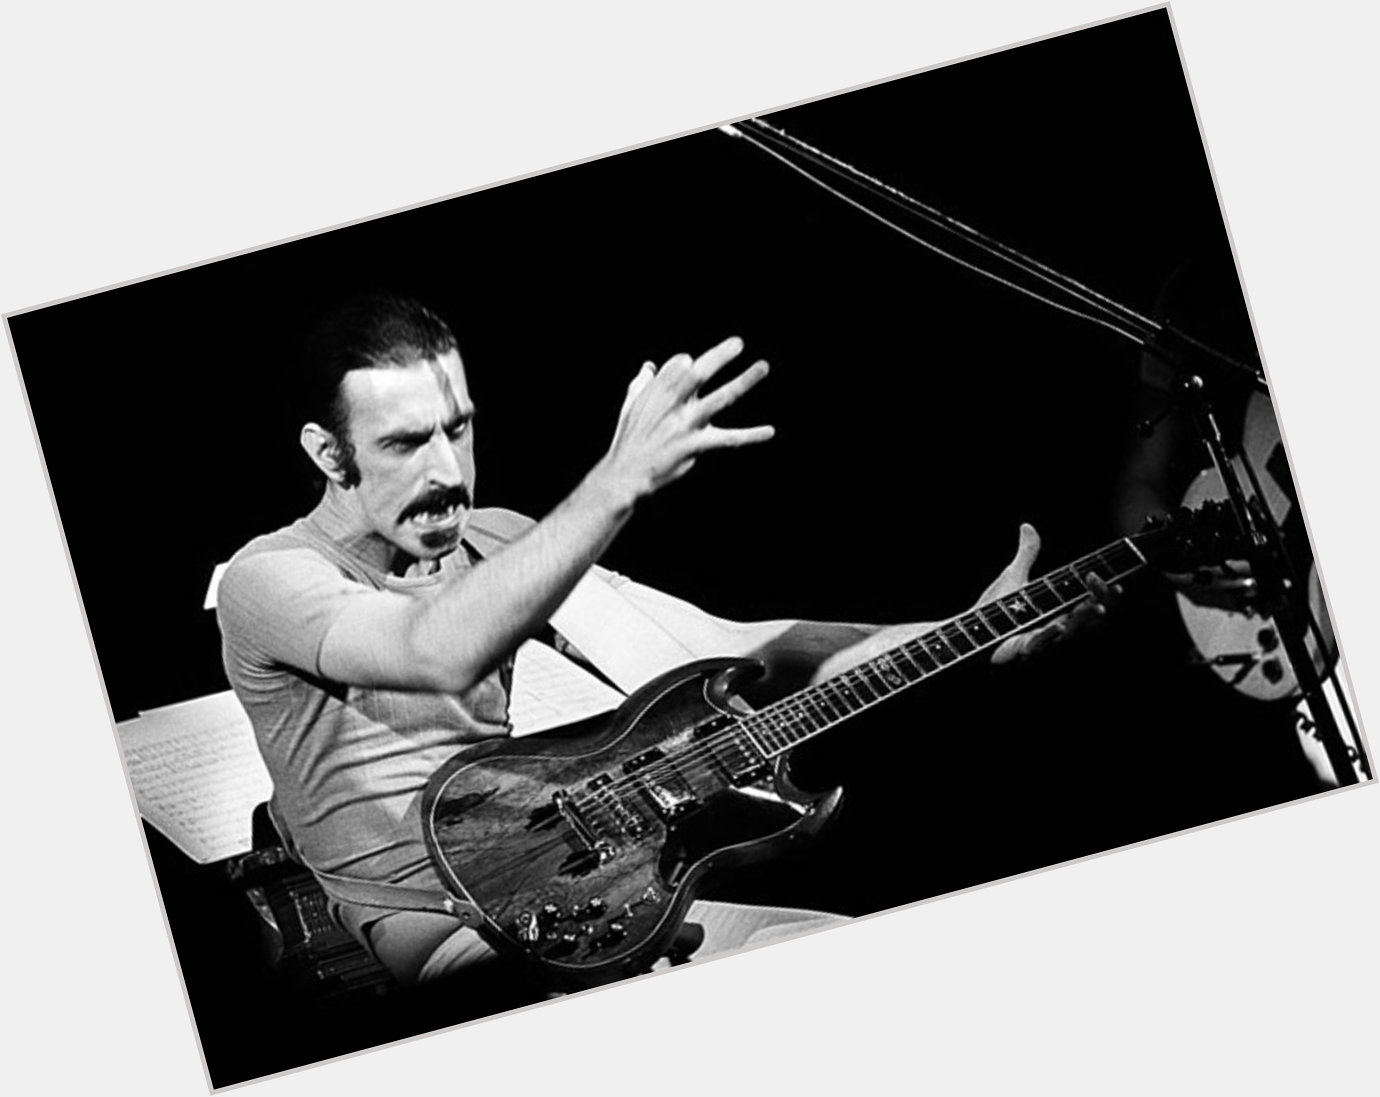 A very special Ordinary Man happy birthday to Frank Zappa. 